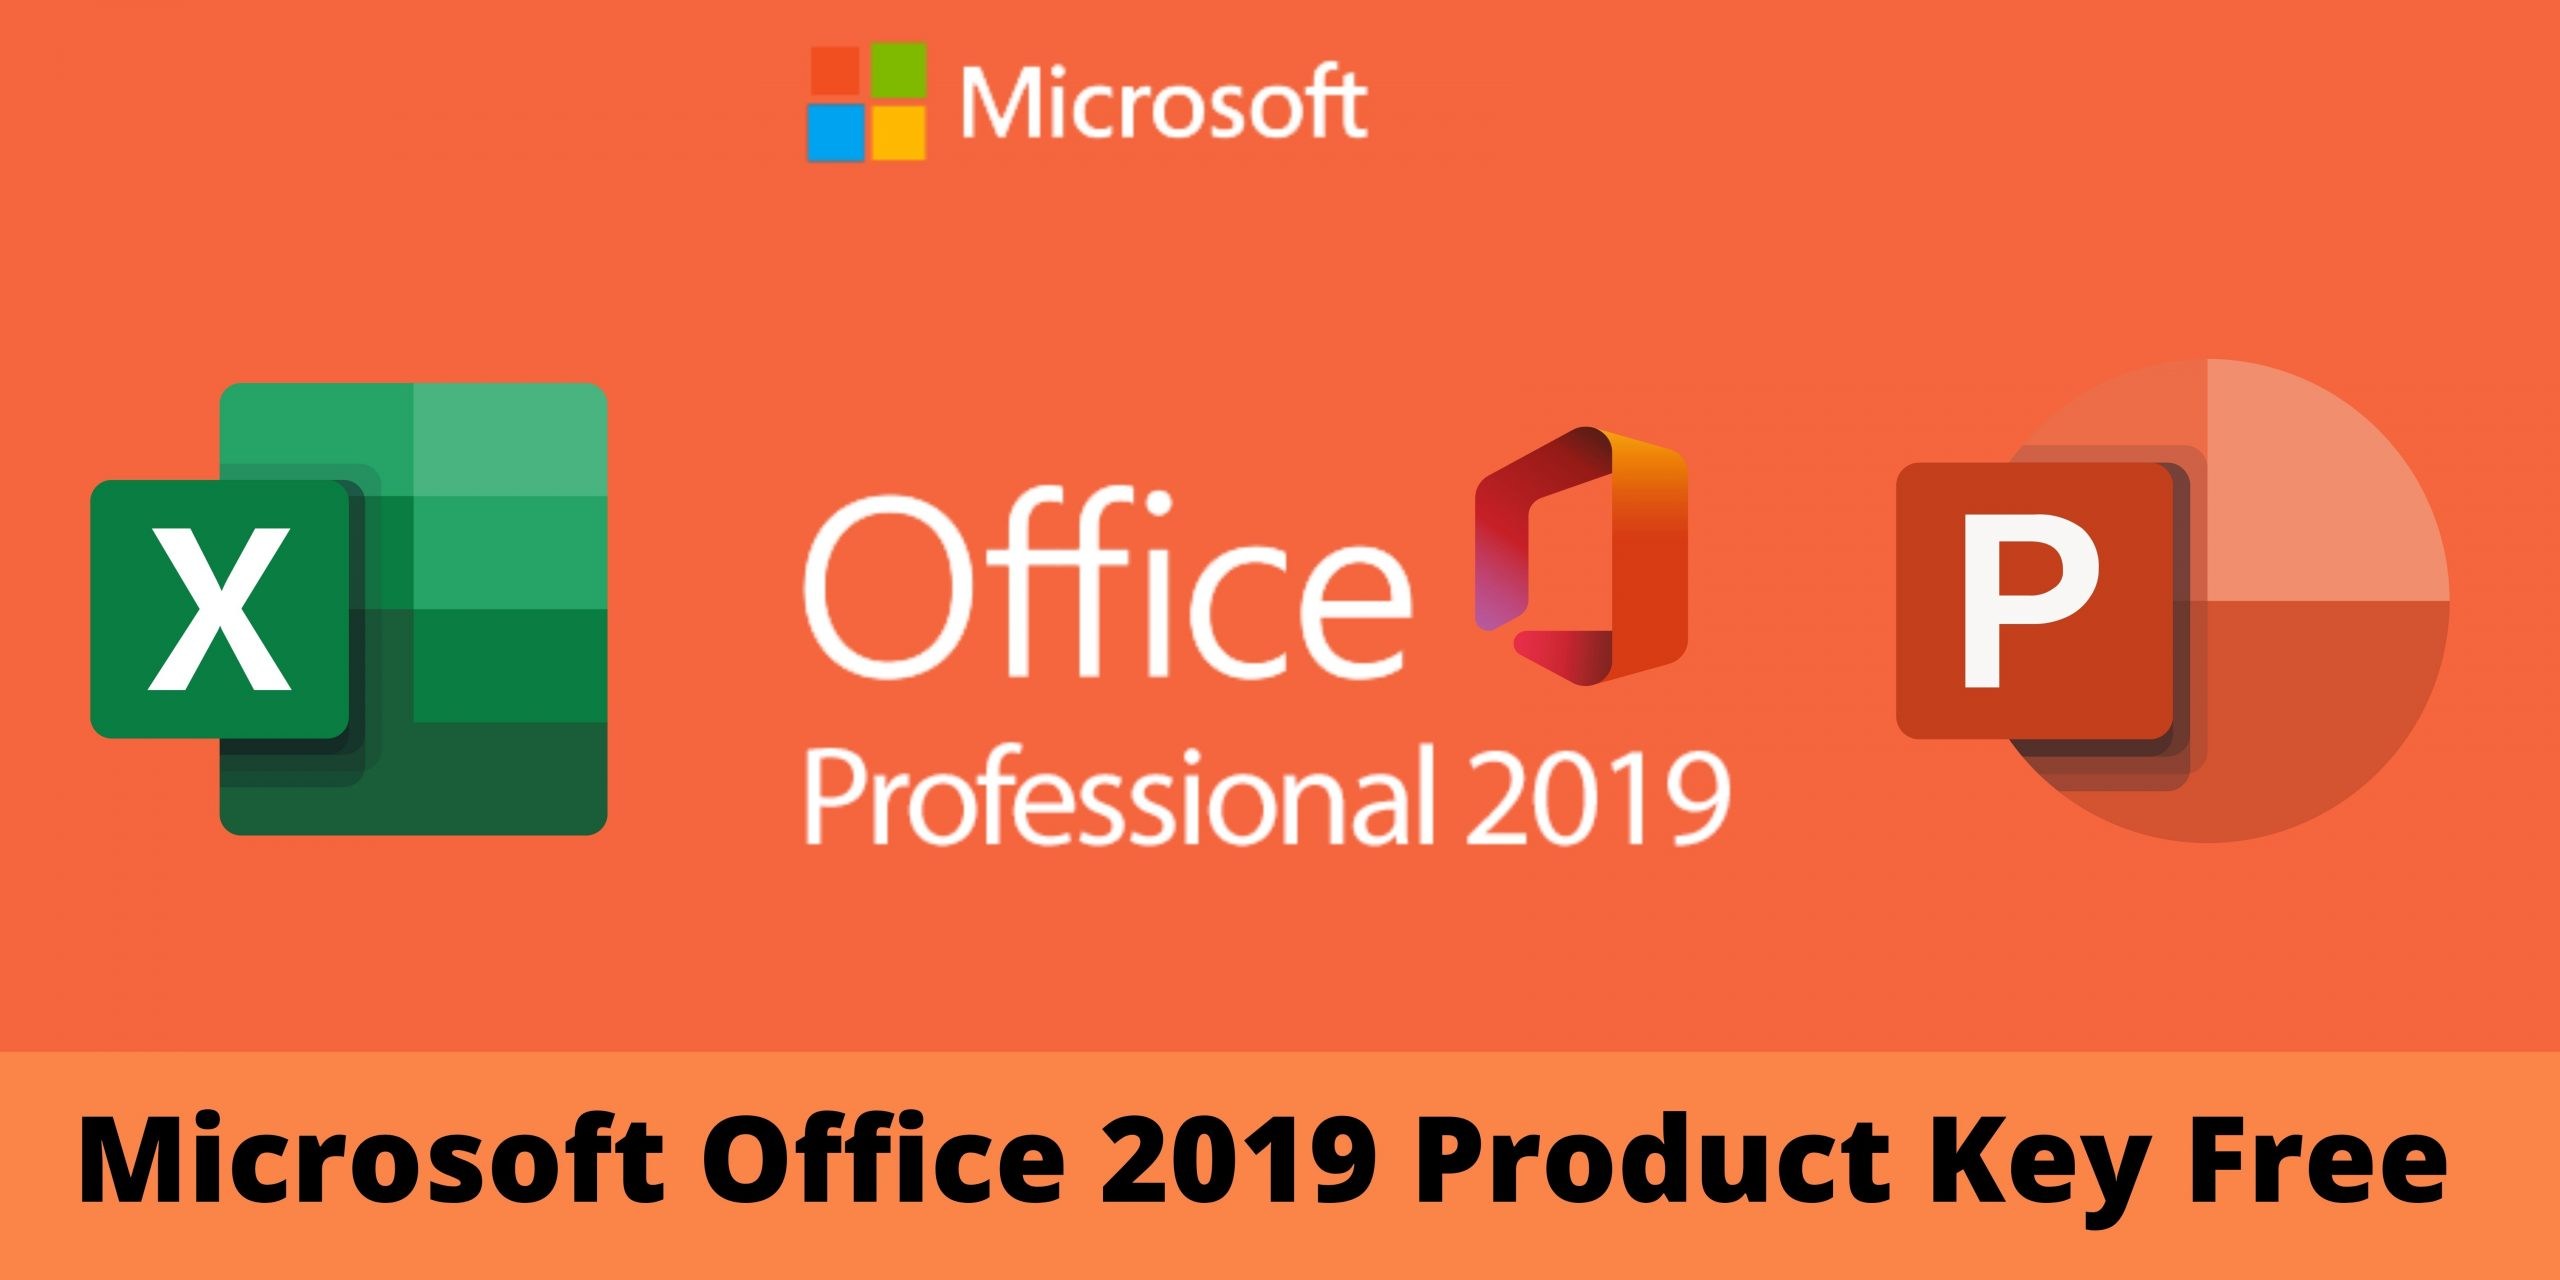 Microsoft Office 2019 Product Key Free